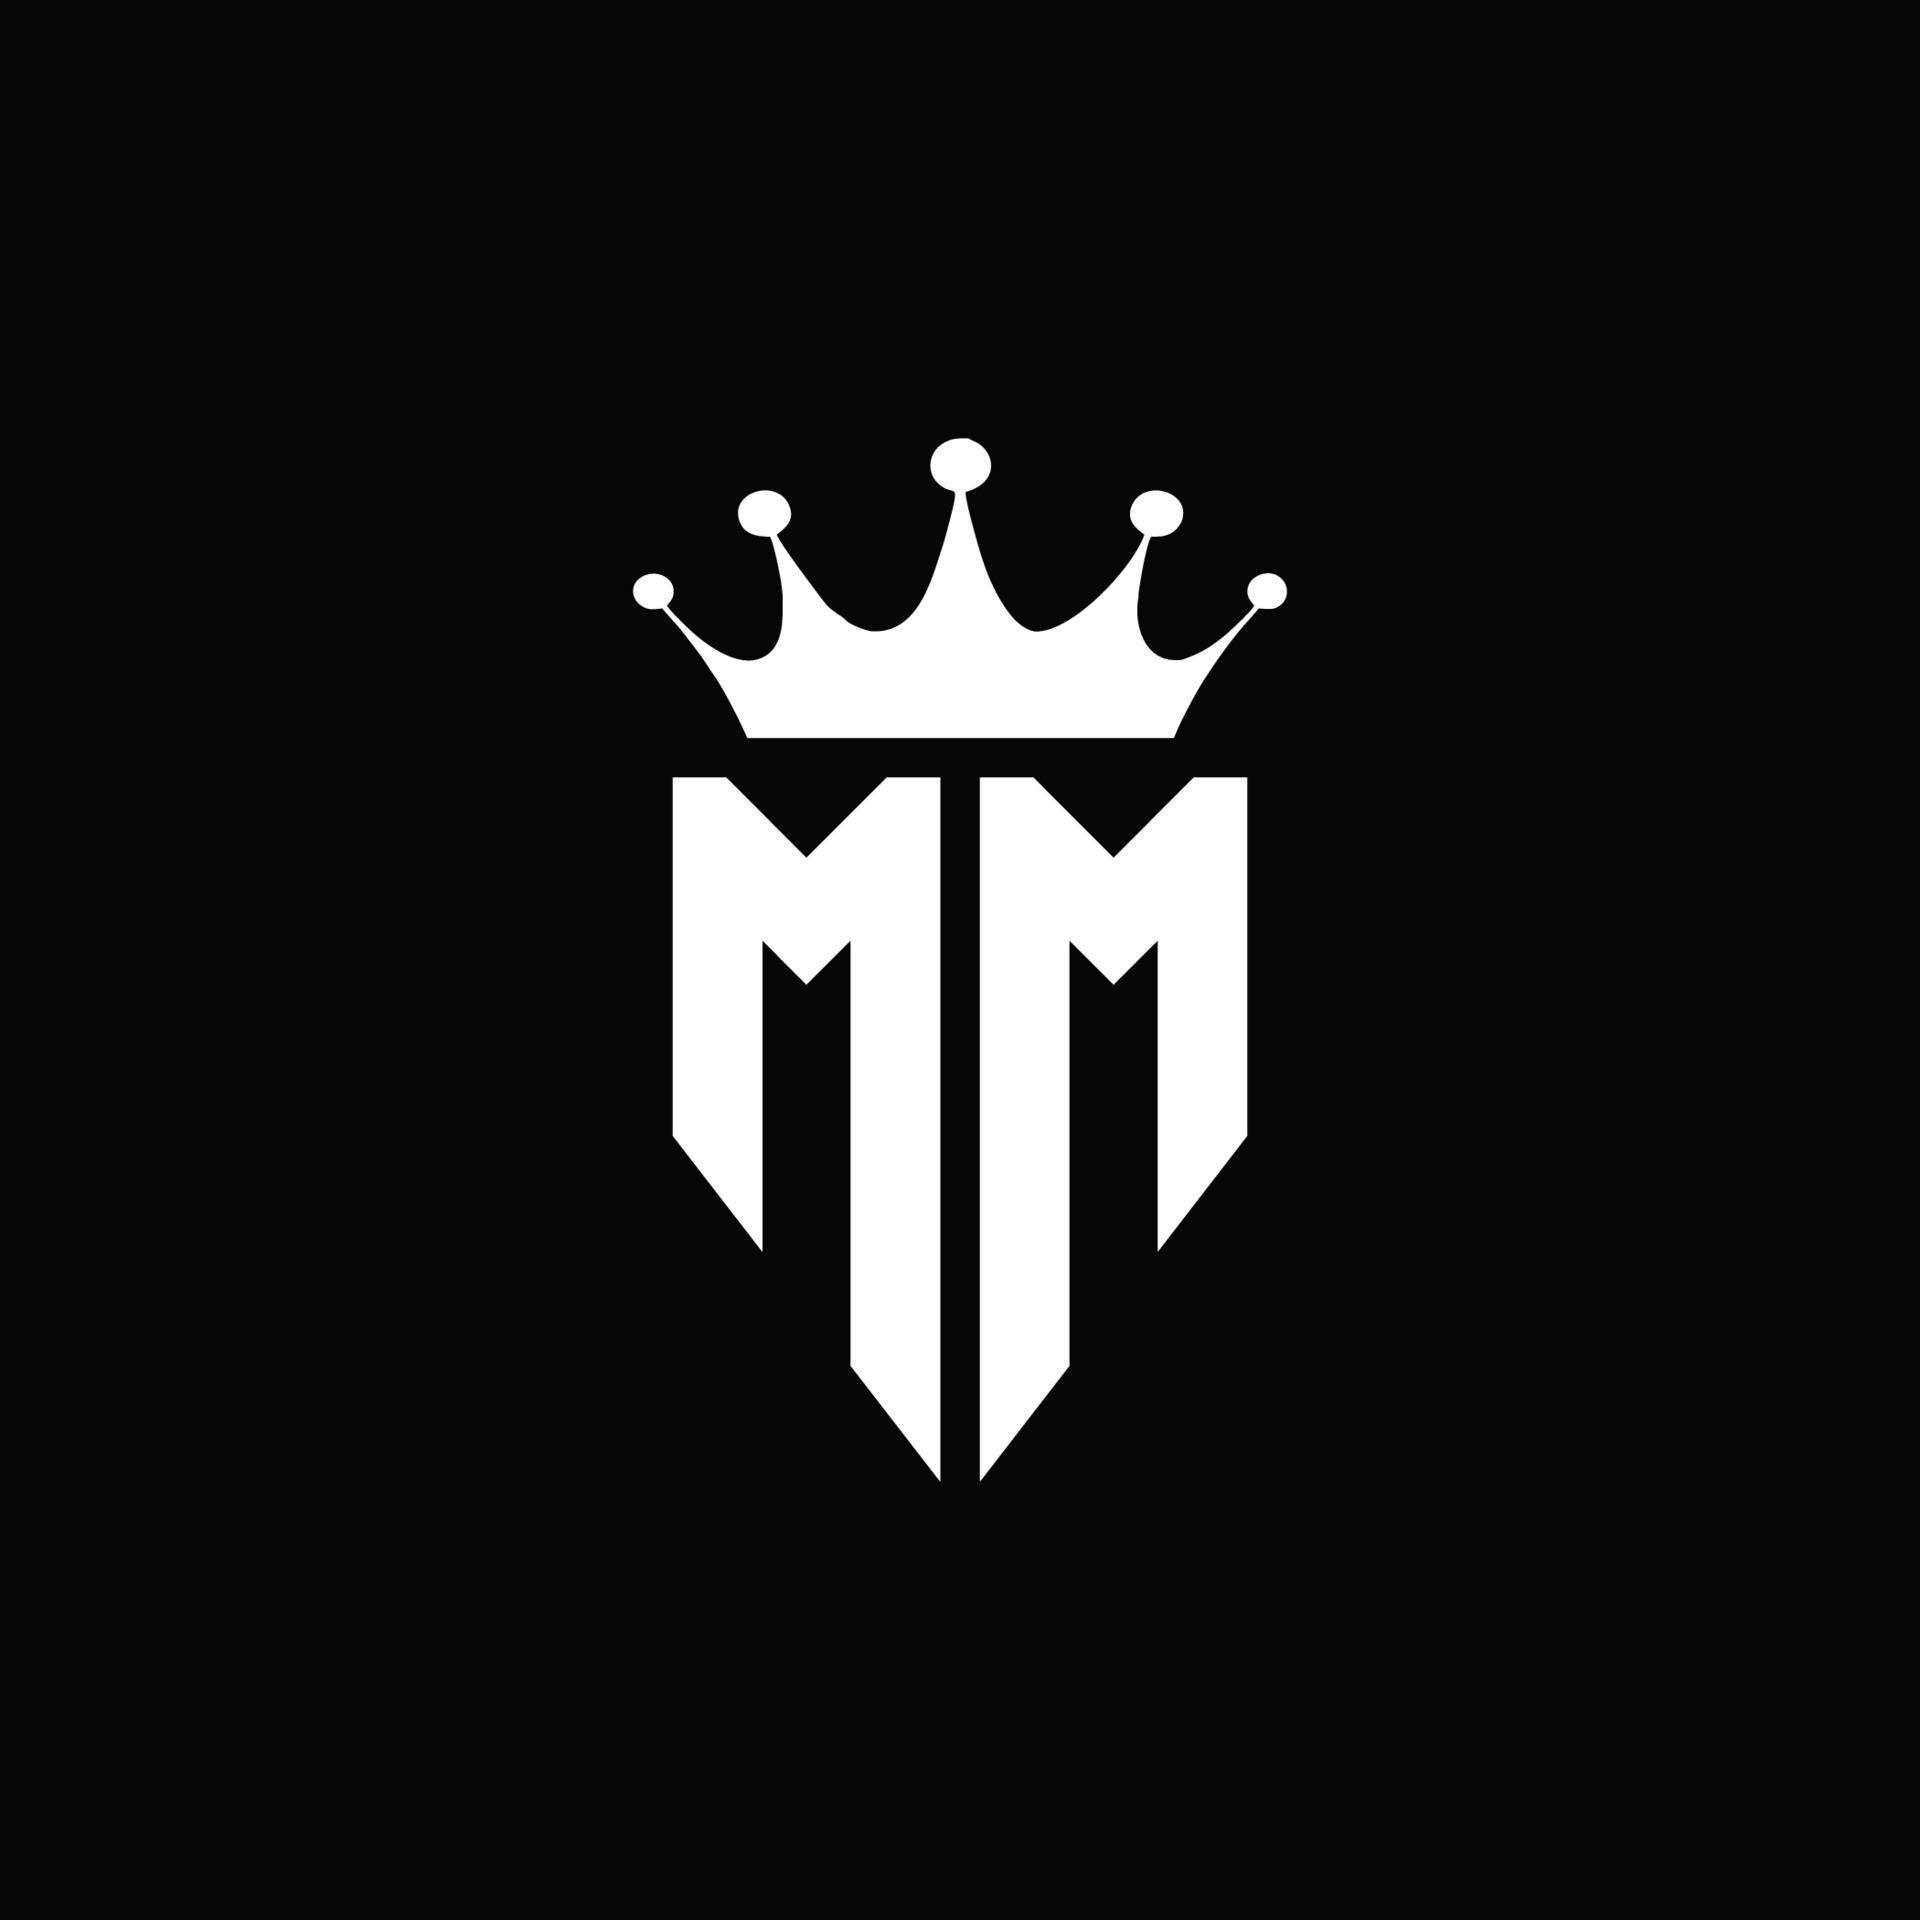 High End Metallic Brand Letter MM Logo